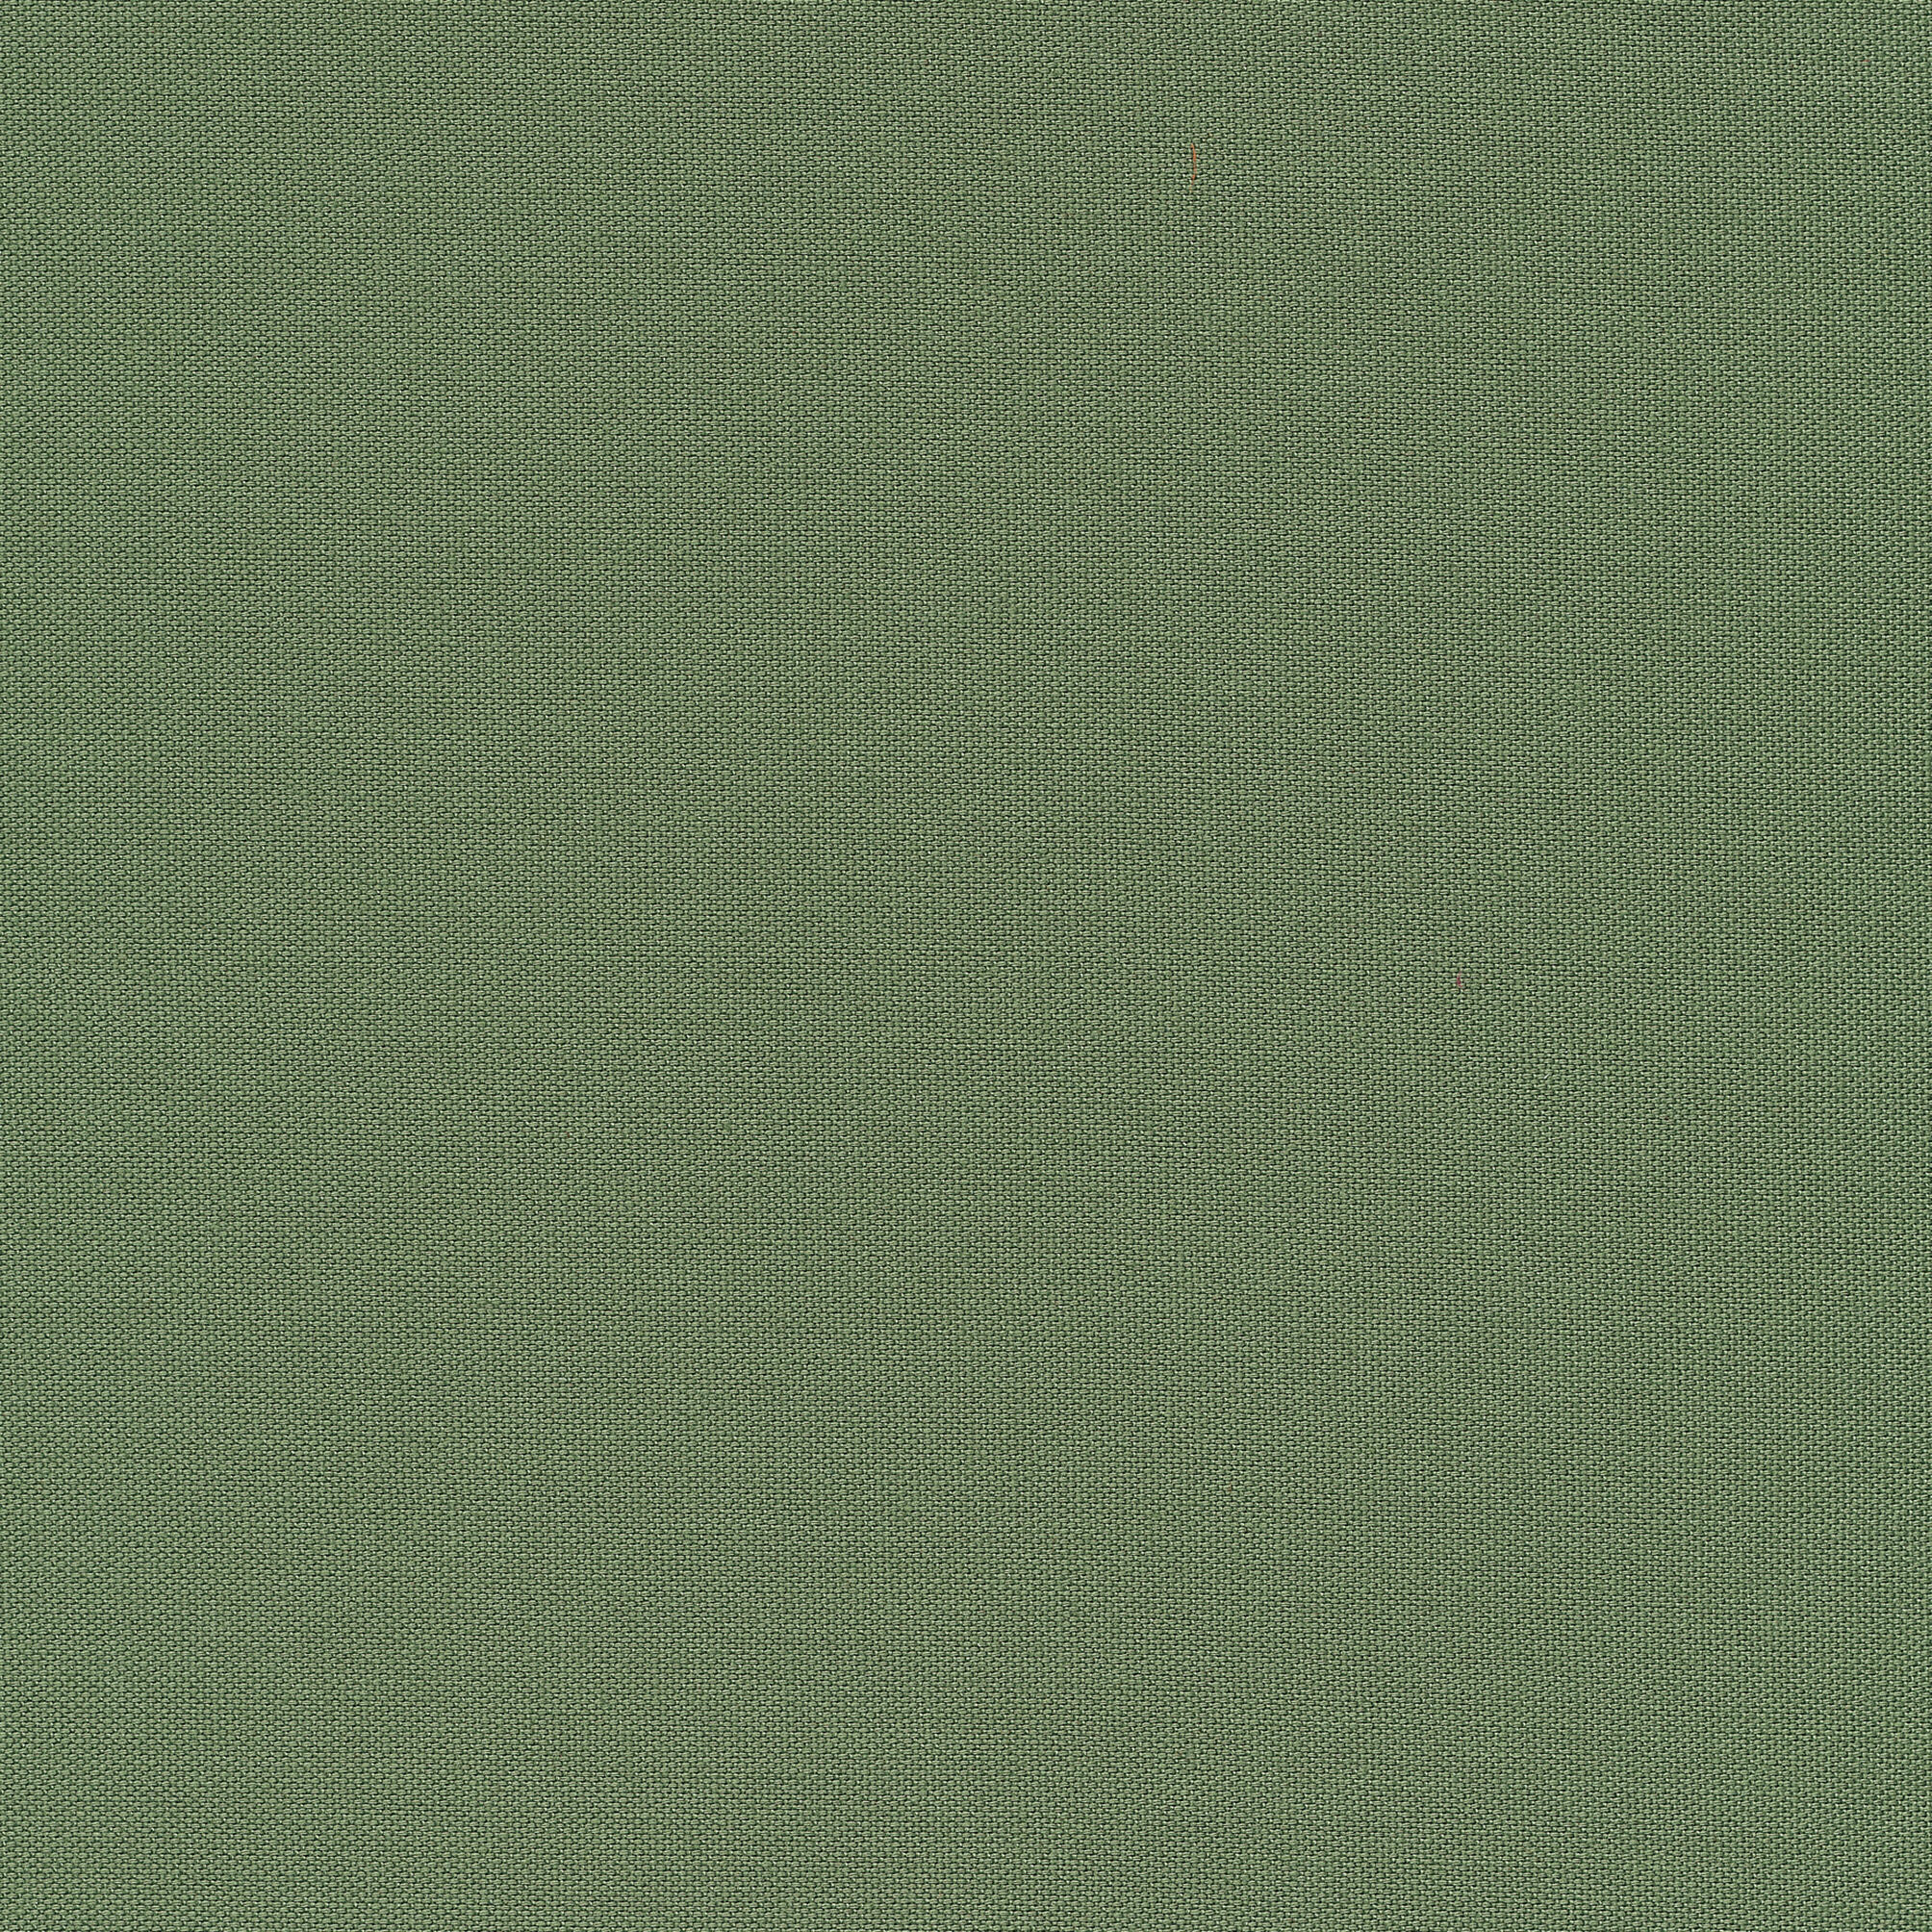 Tela al corte tapicería loneta anna verde ancho 280 cm